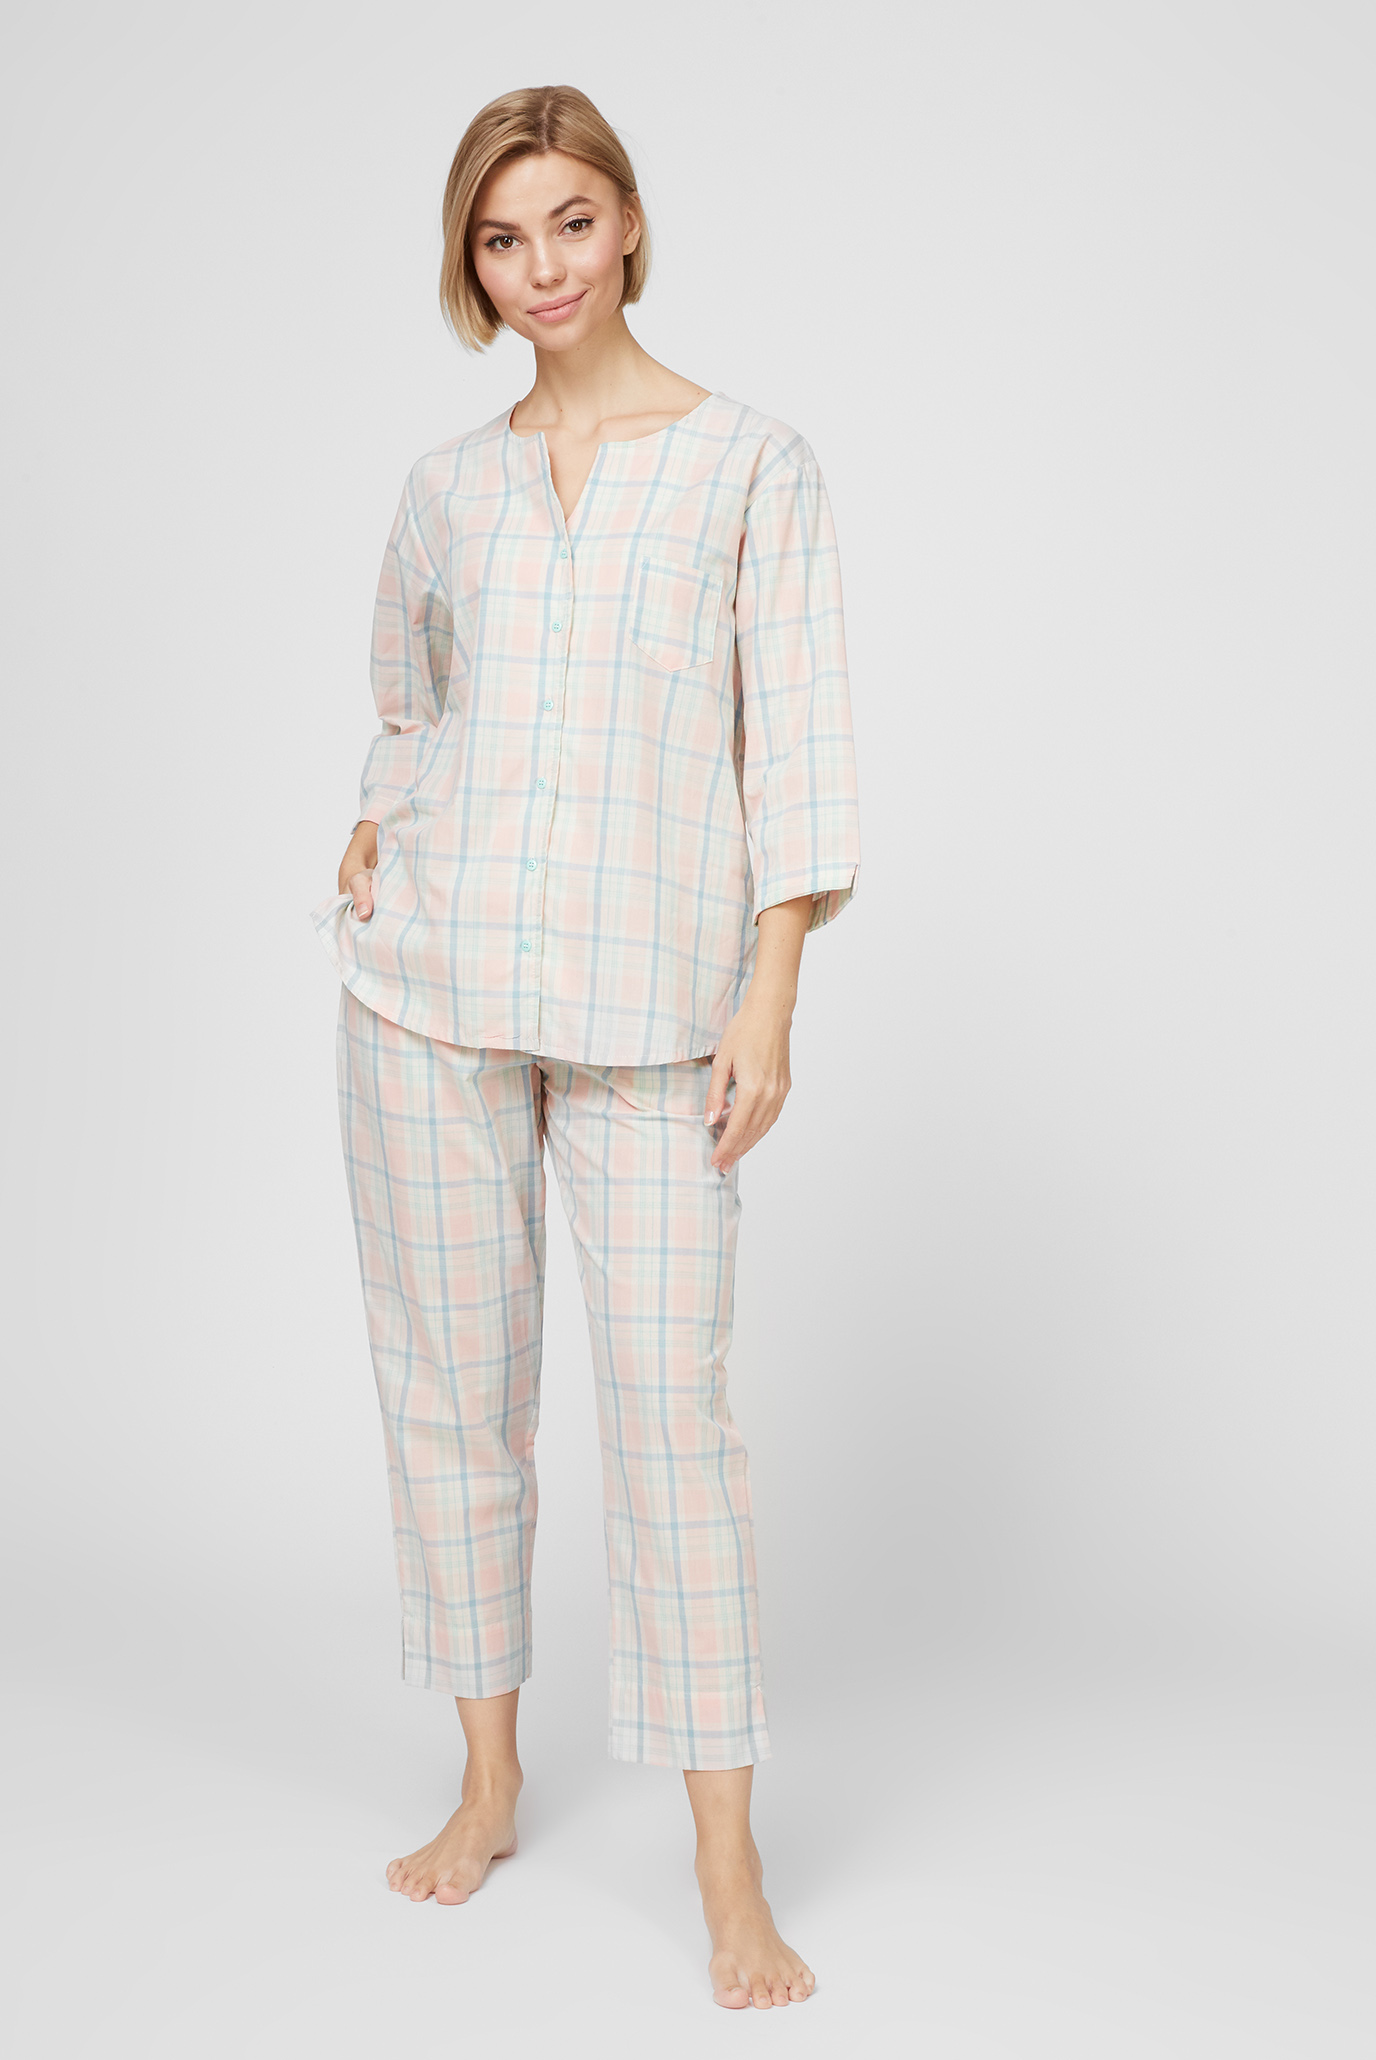 Женская пижама с узором (рубашка, брюки) 1